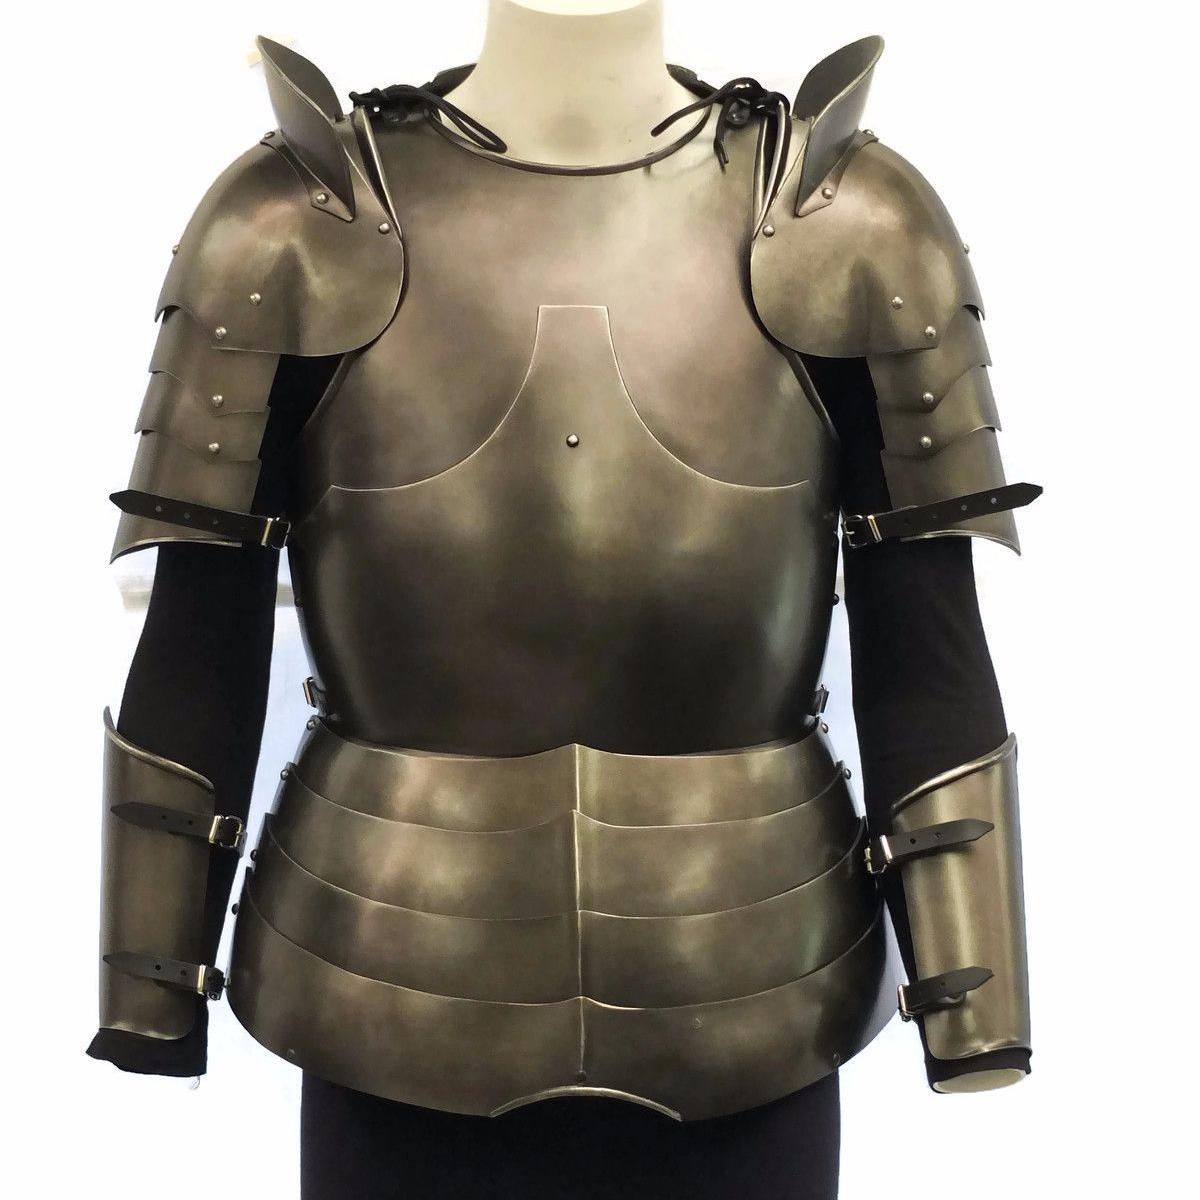 upper armor